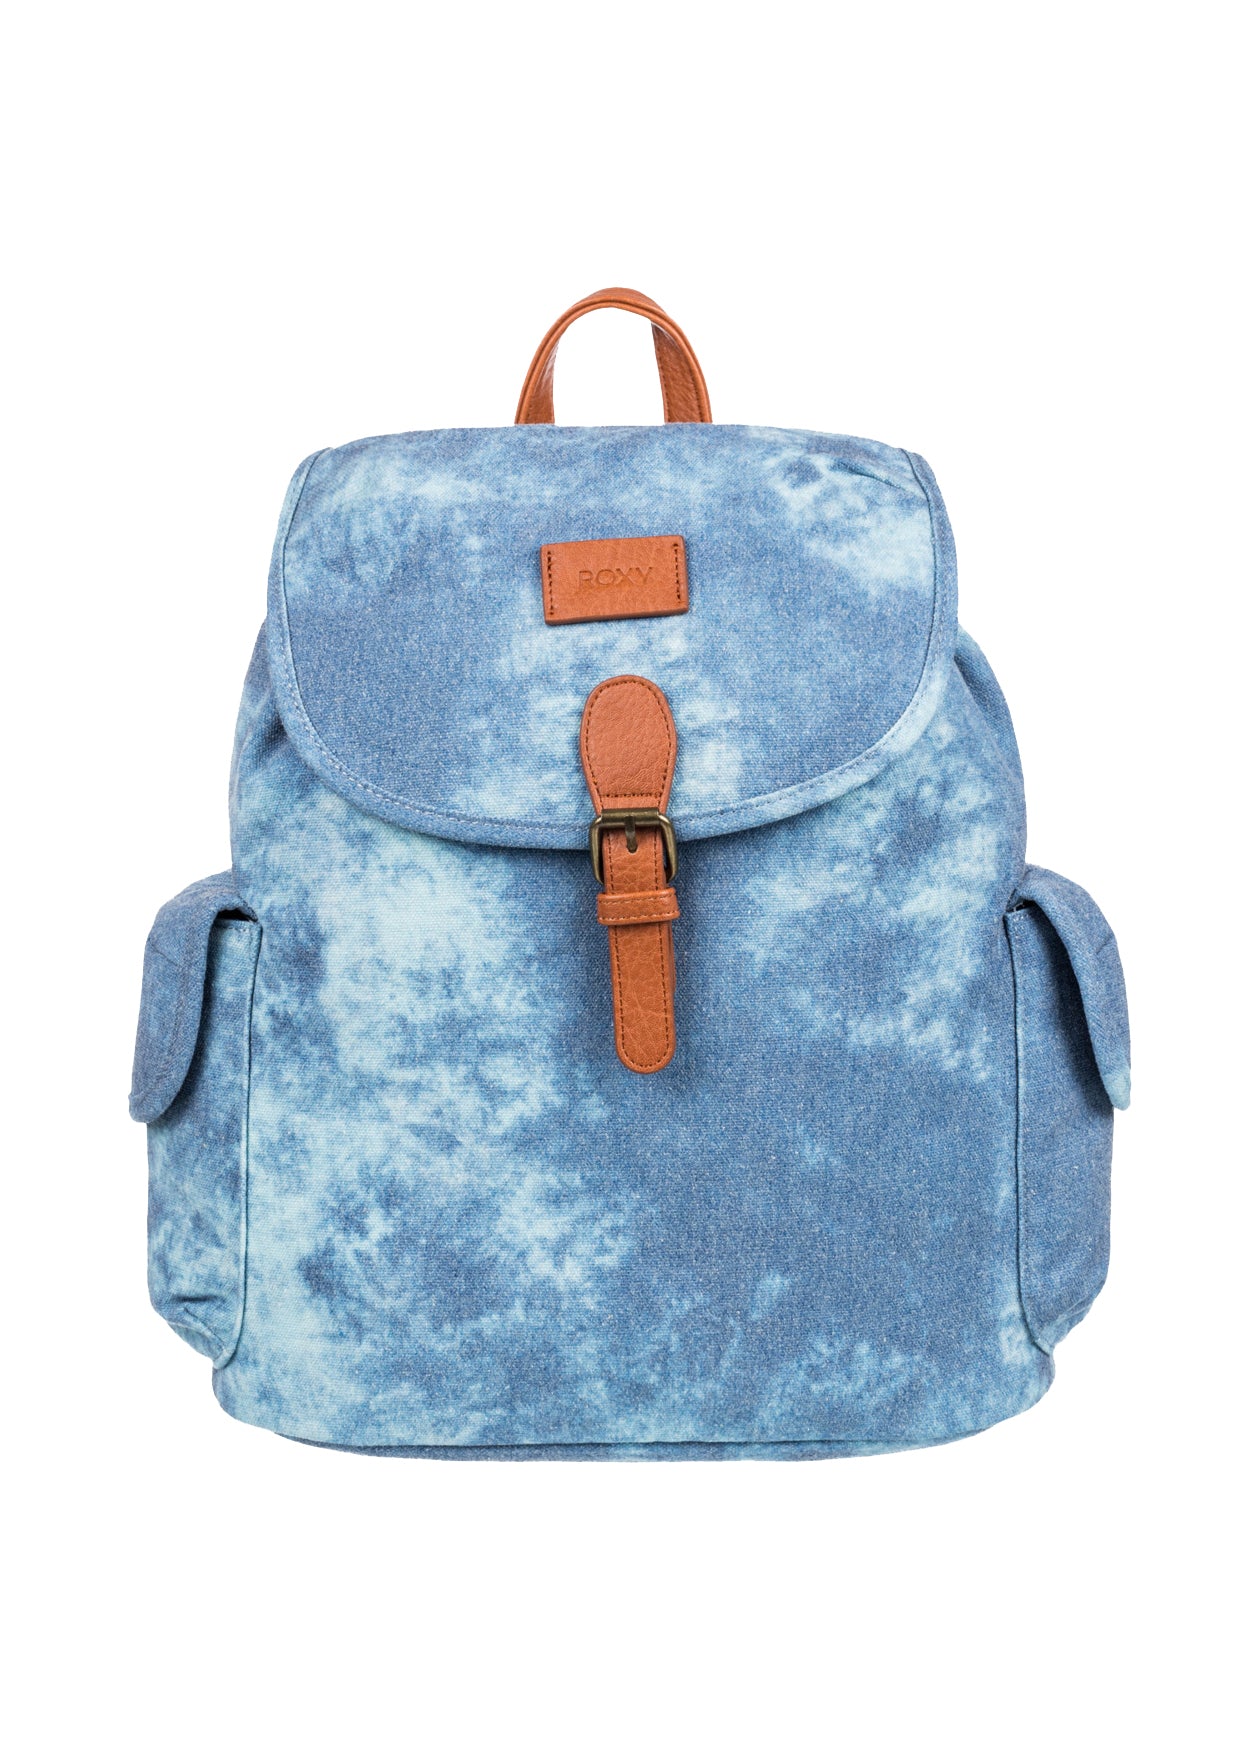 Roxy Ocean Life Medium Backpack BNG5 OS